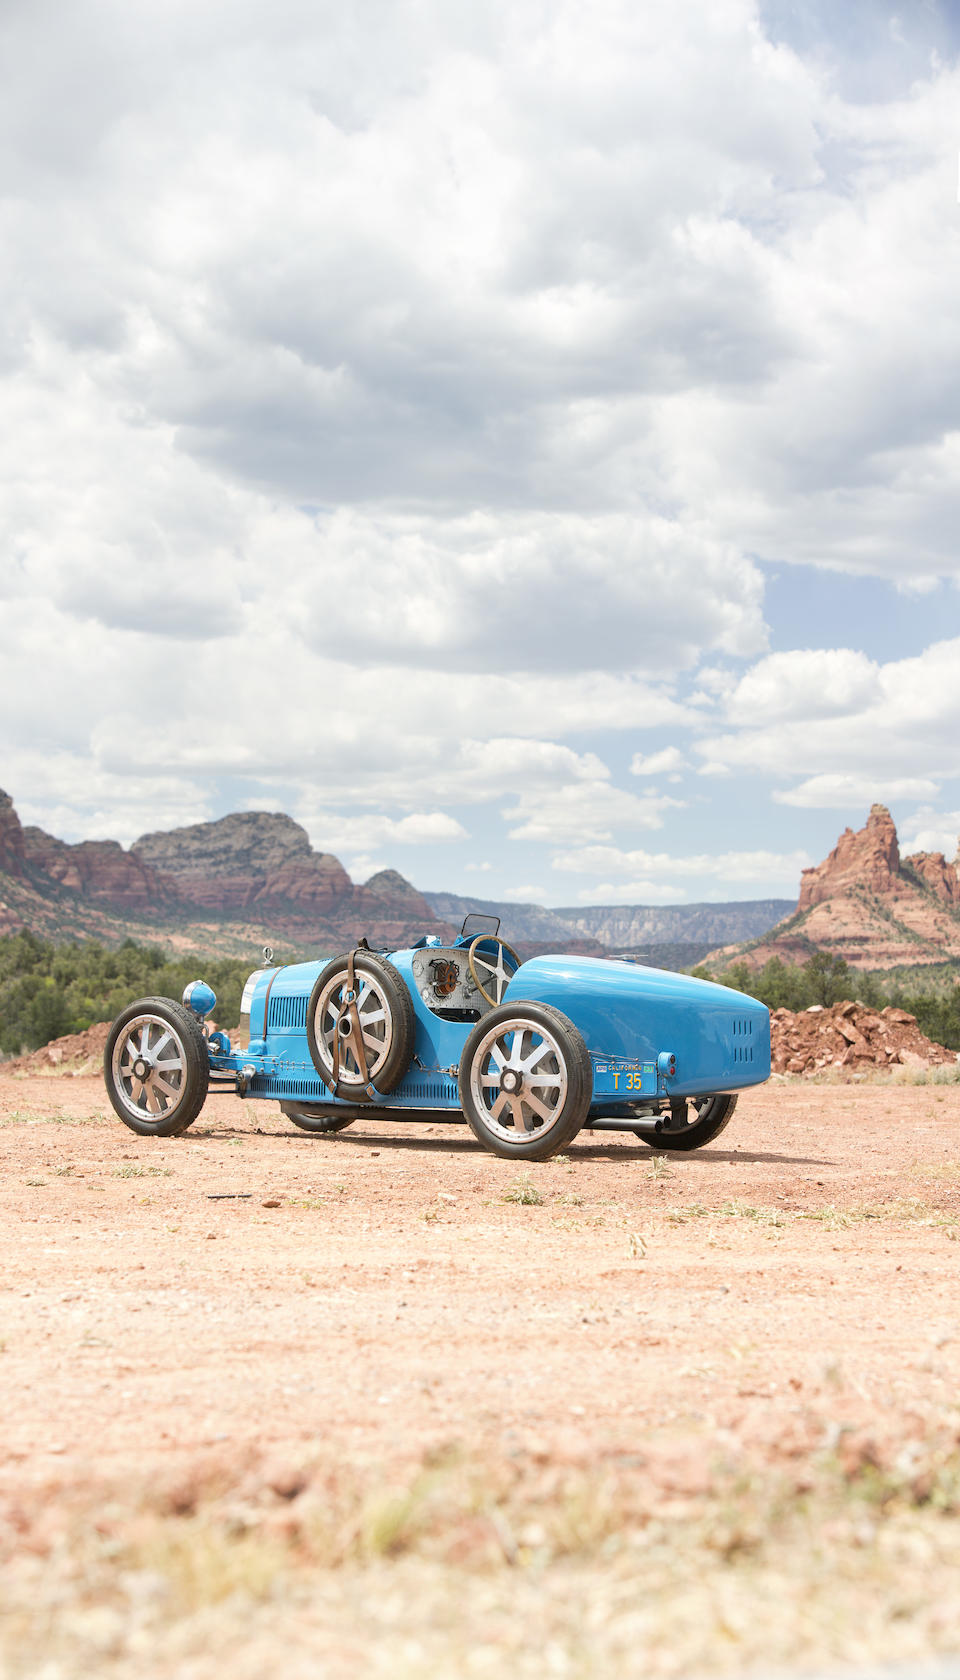 The Prototype and Bugatti Works, ex-Sir Robert Bird, Col. G. Niles and Henry Haga,1924 Bugatti Type 35 Grand Prix  Chassis no. 4323